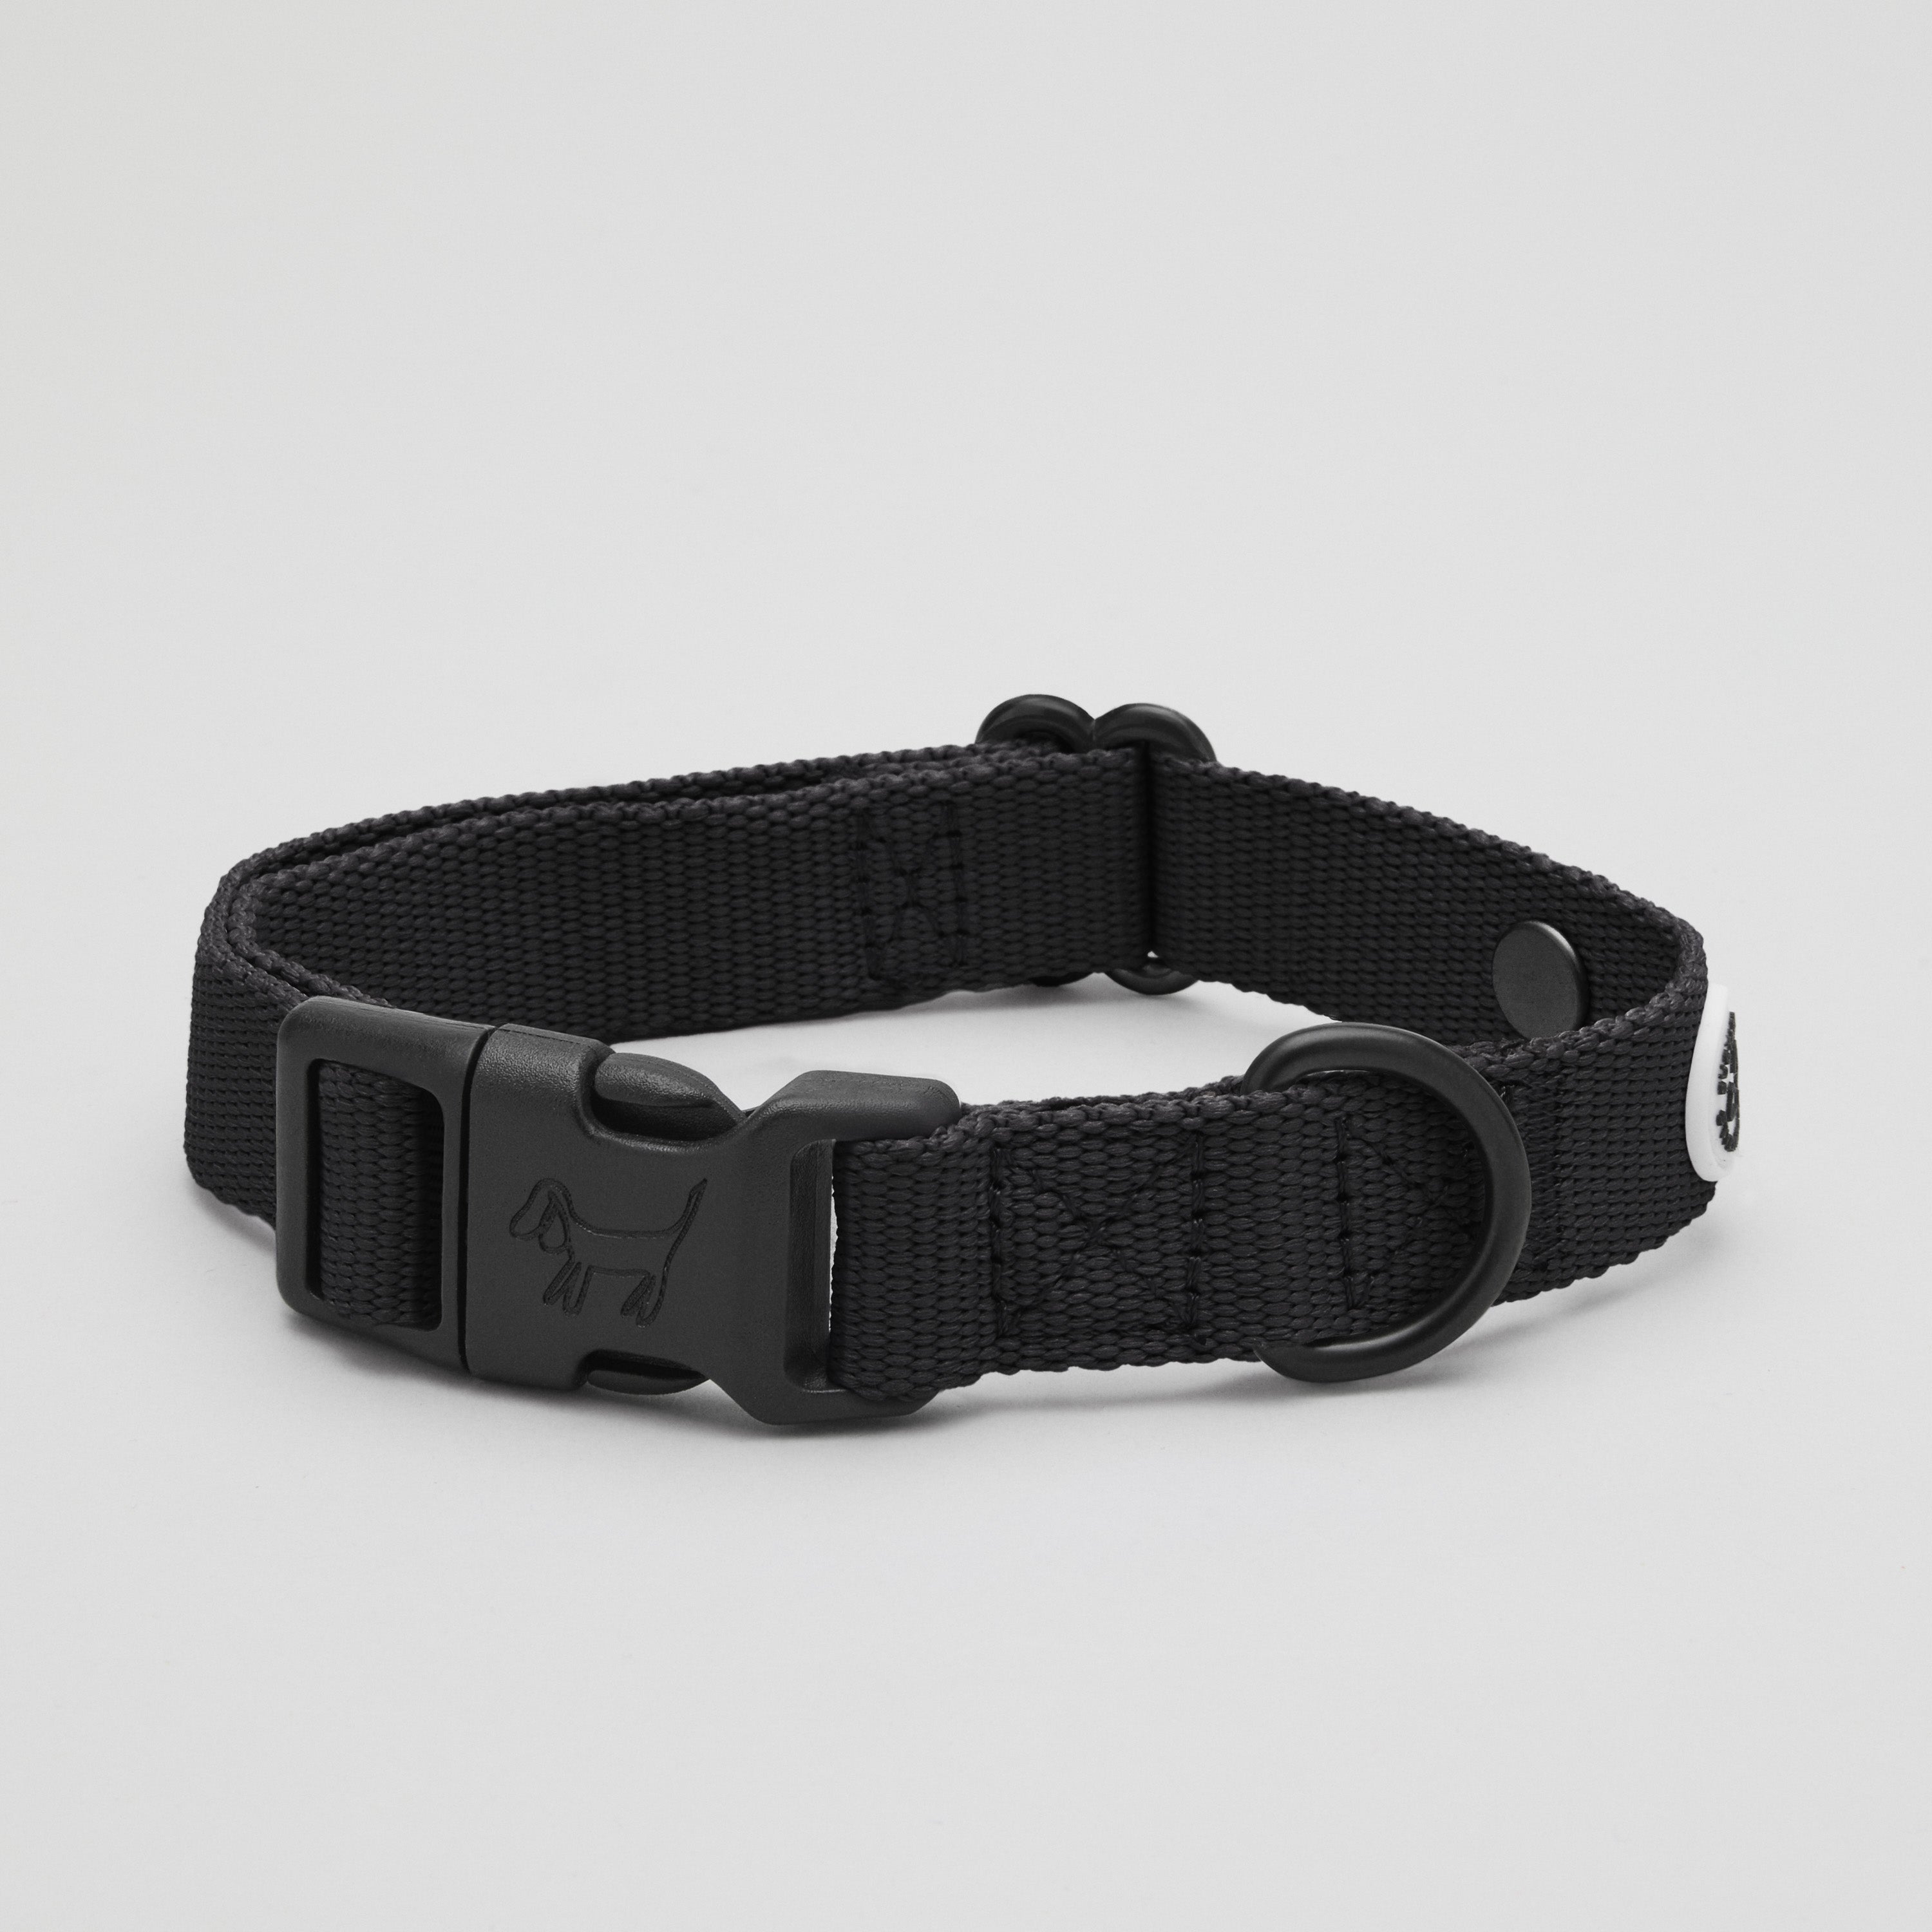 Pitch Black Dog Collar